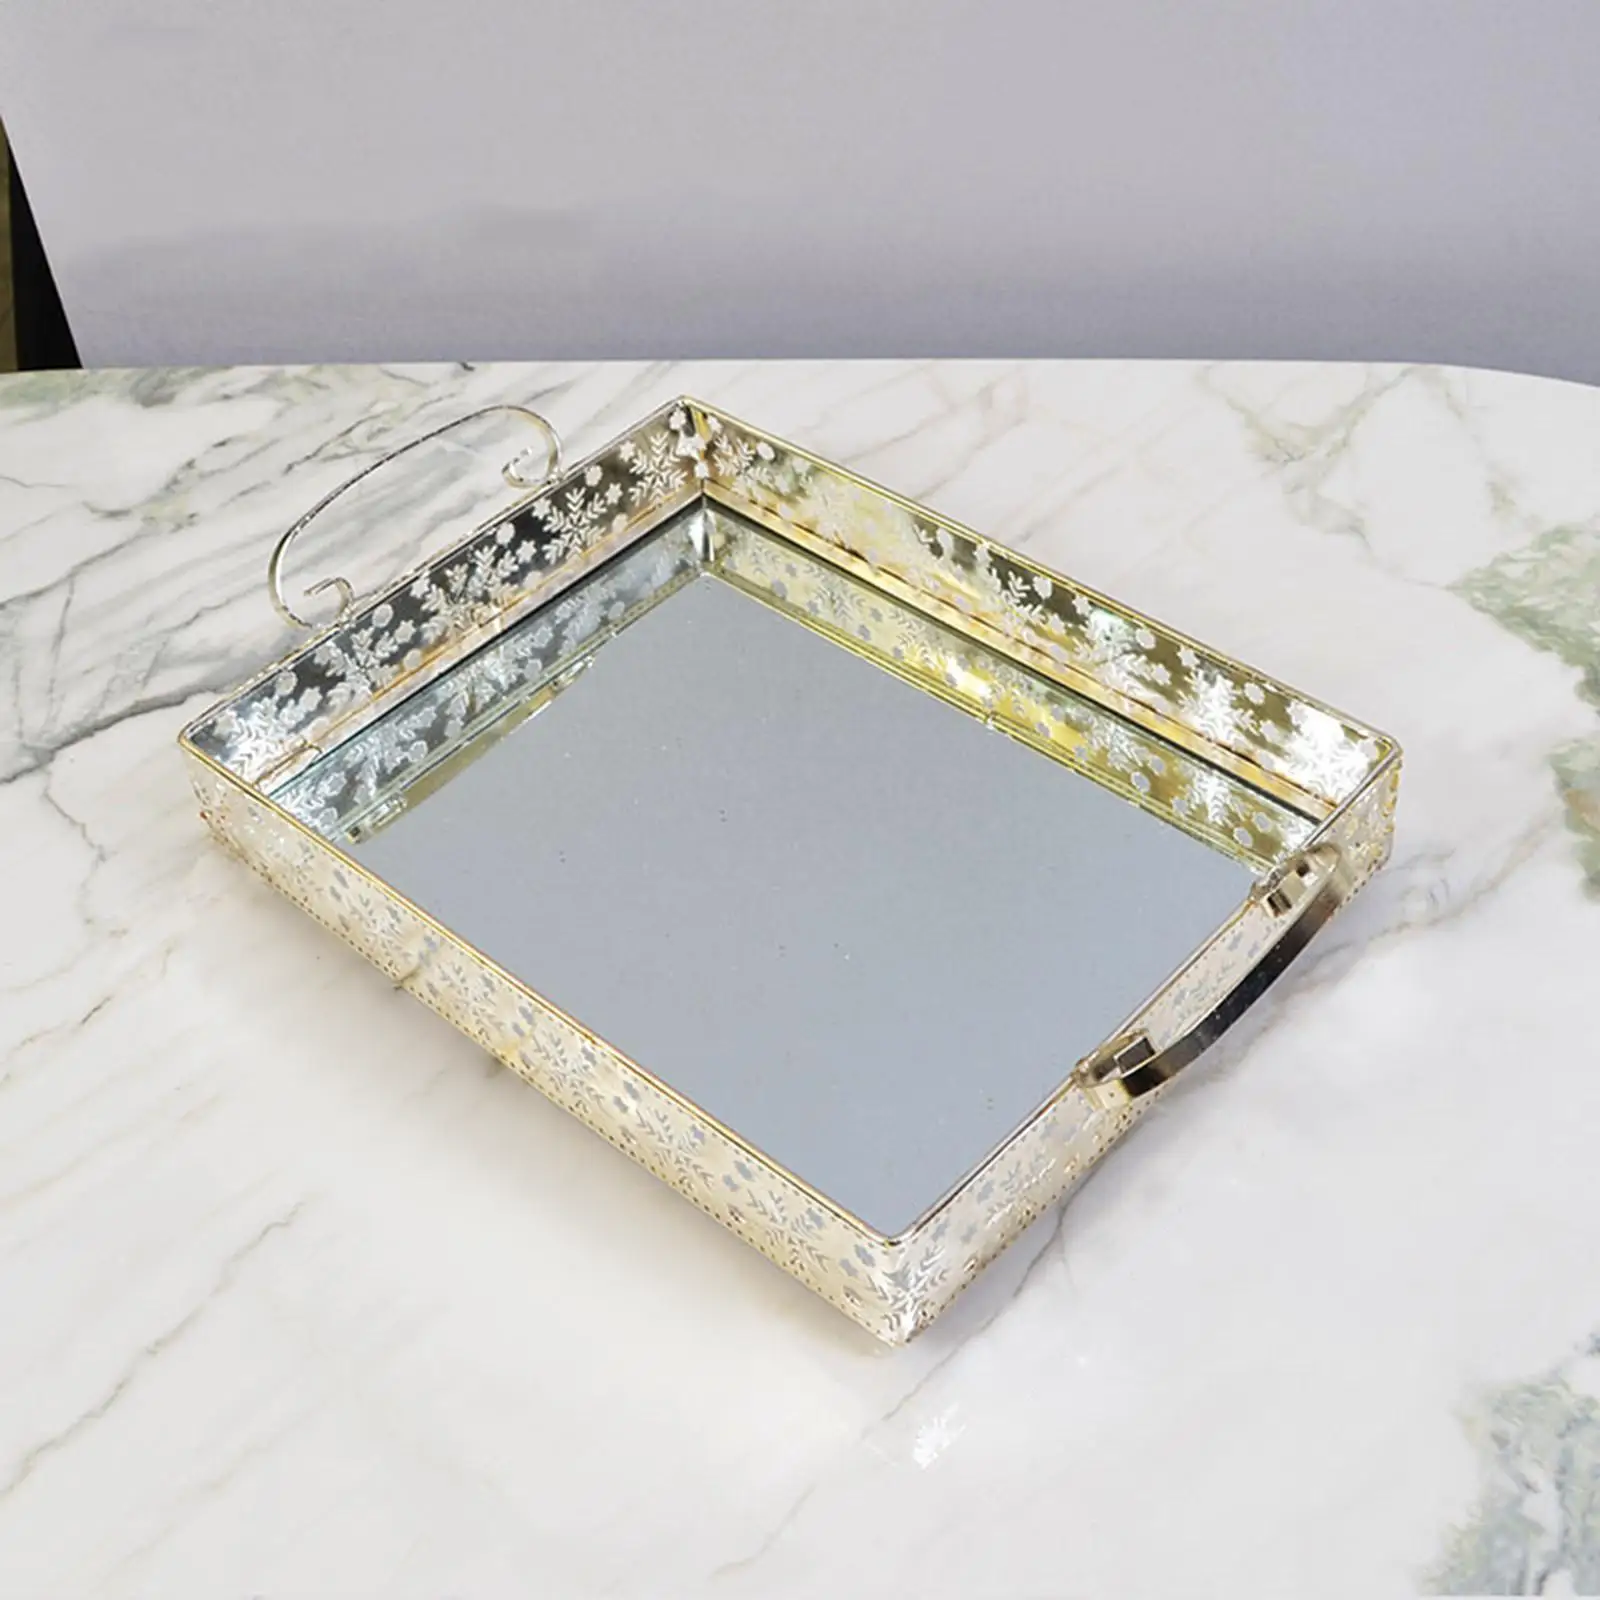 Dresser Organizer Tray Perfume Organizer Tray Mirrored Tray Mirror Decorative Tray for Bathroom Living Room Countertop Decor